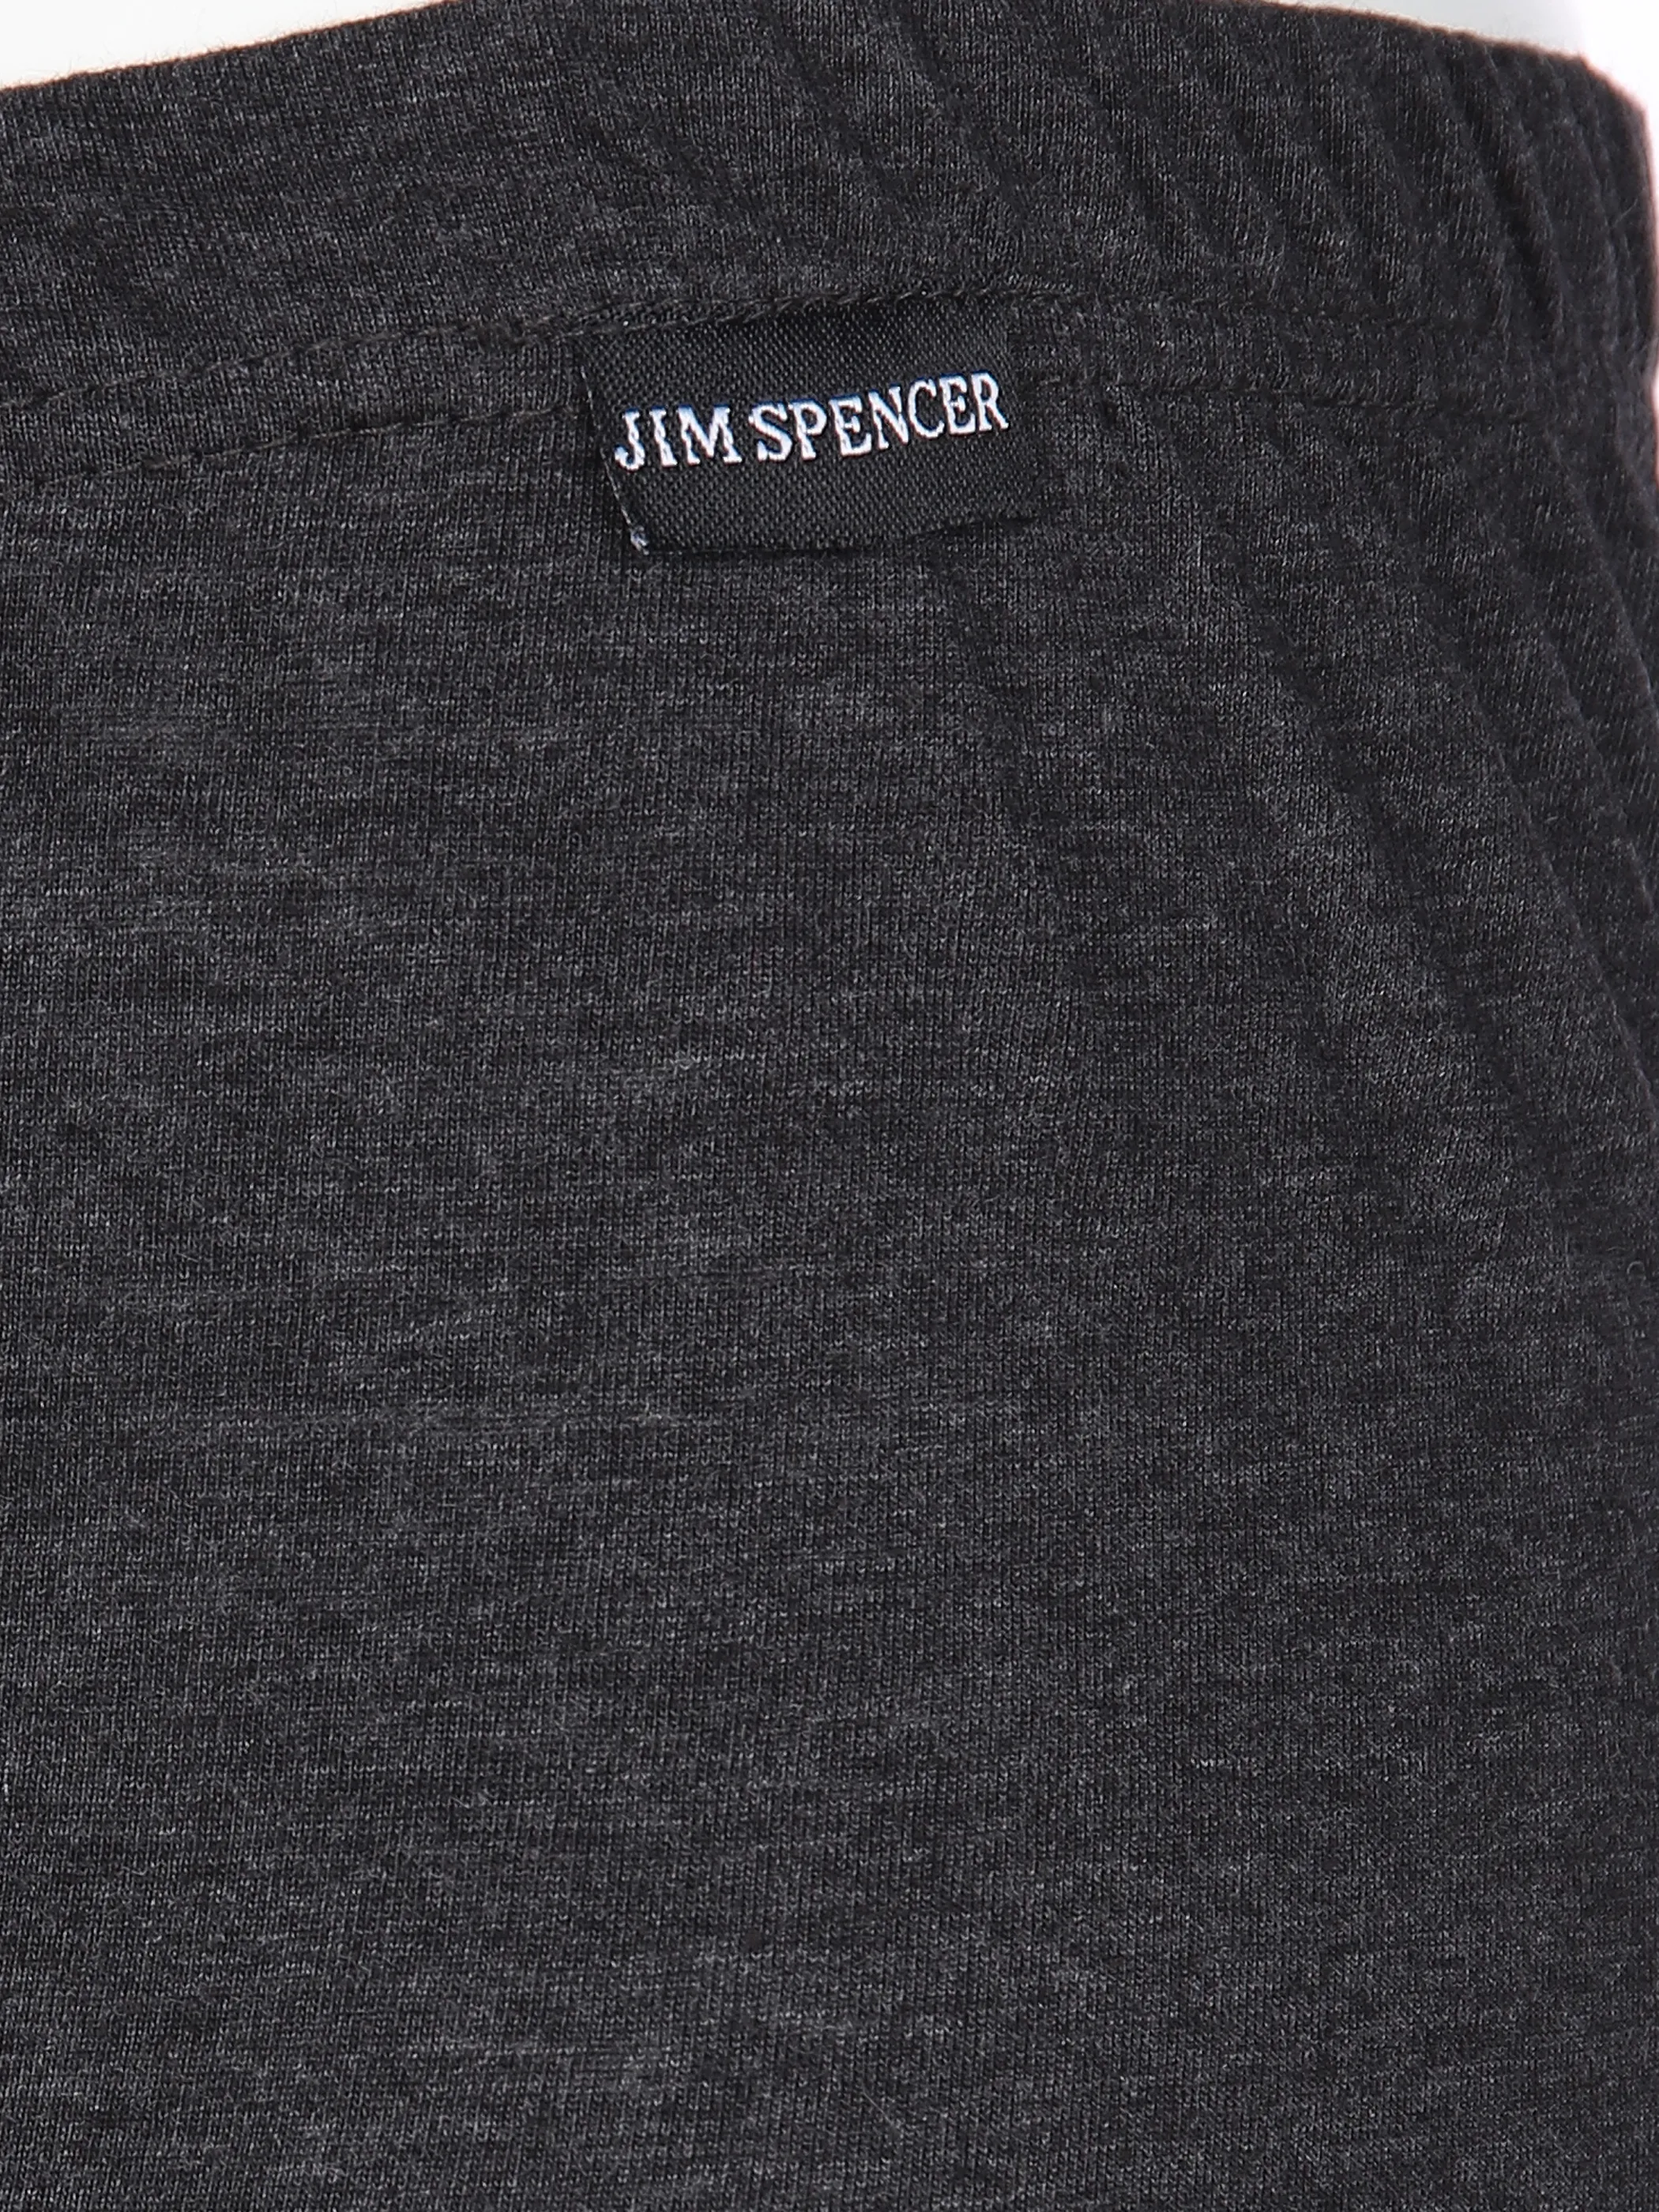 Jim Spencer He-Boxershorts 3er Pack Grau 648265 GRAU 3